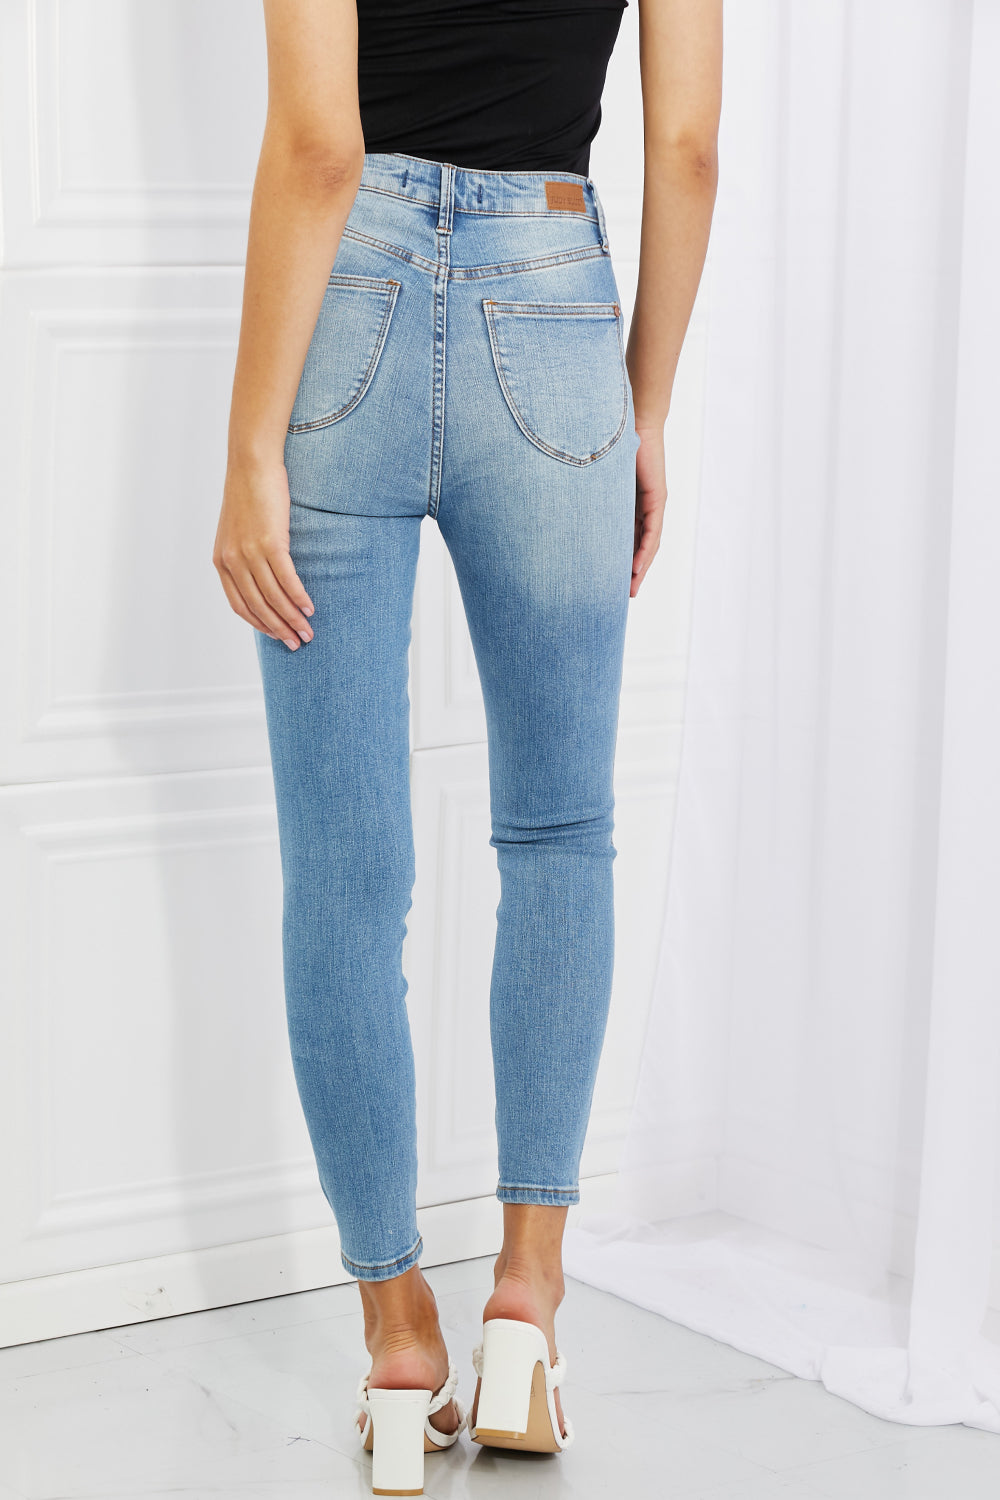 Judy Blue Jeans High Waisted Skinnies